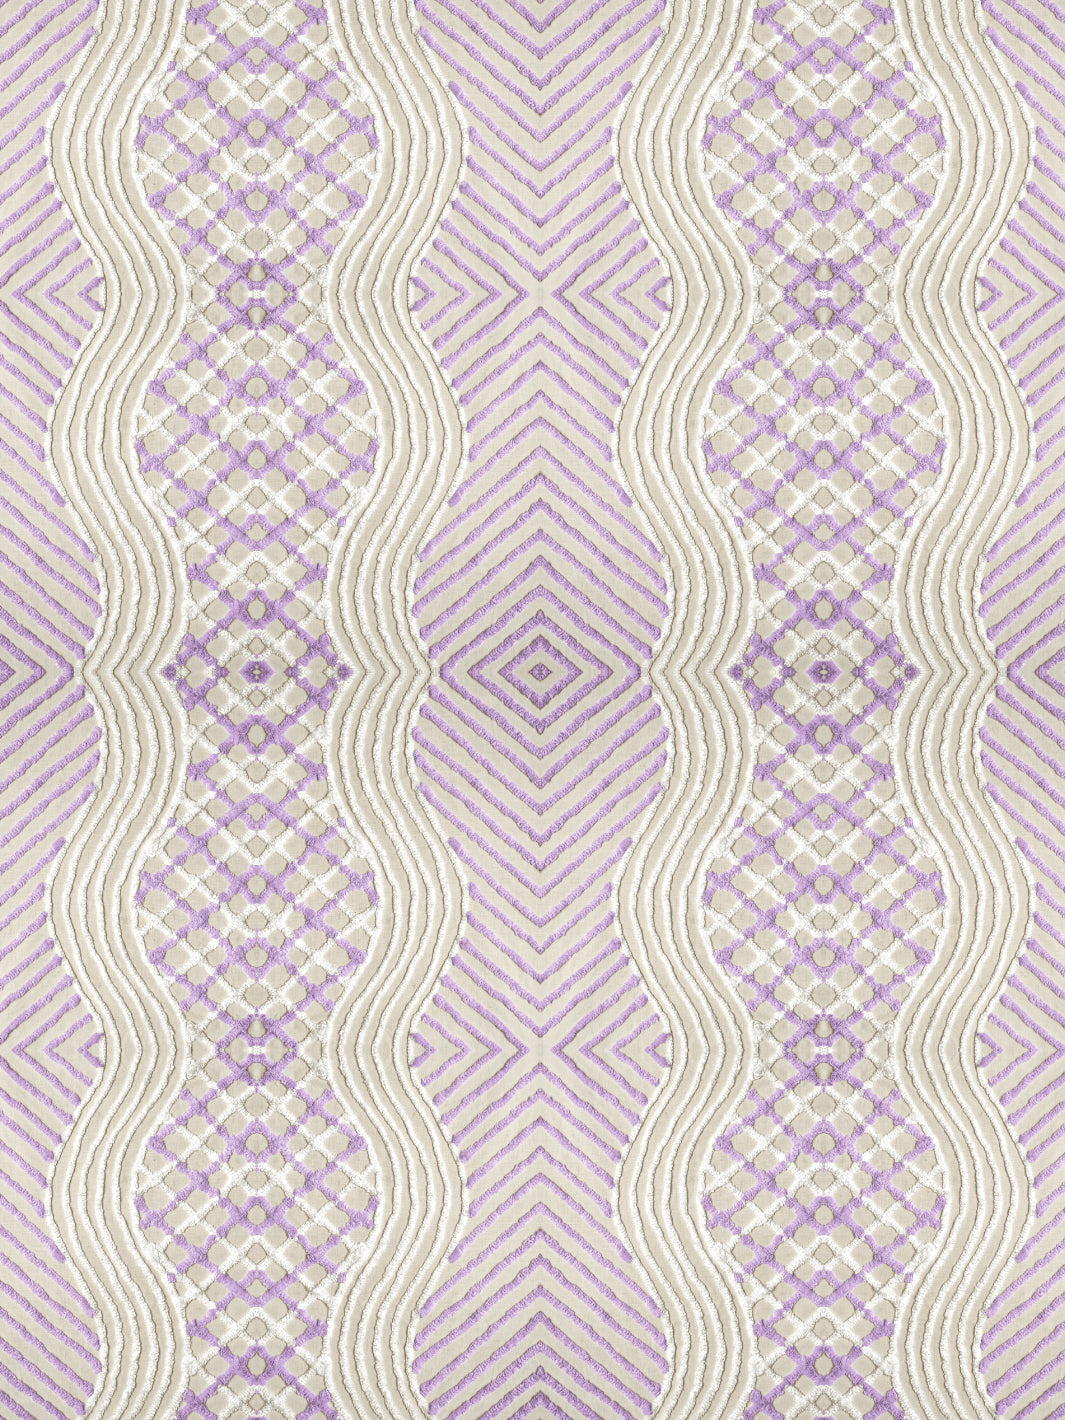 'Chenille Stripe' Wallpaper by Chris Benz - Lilac